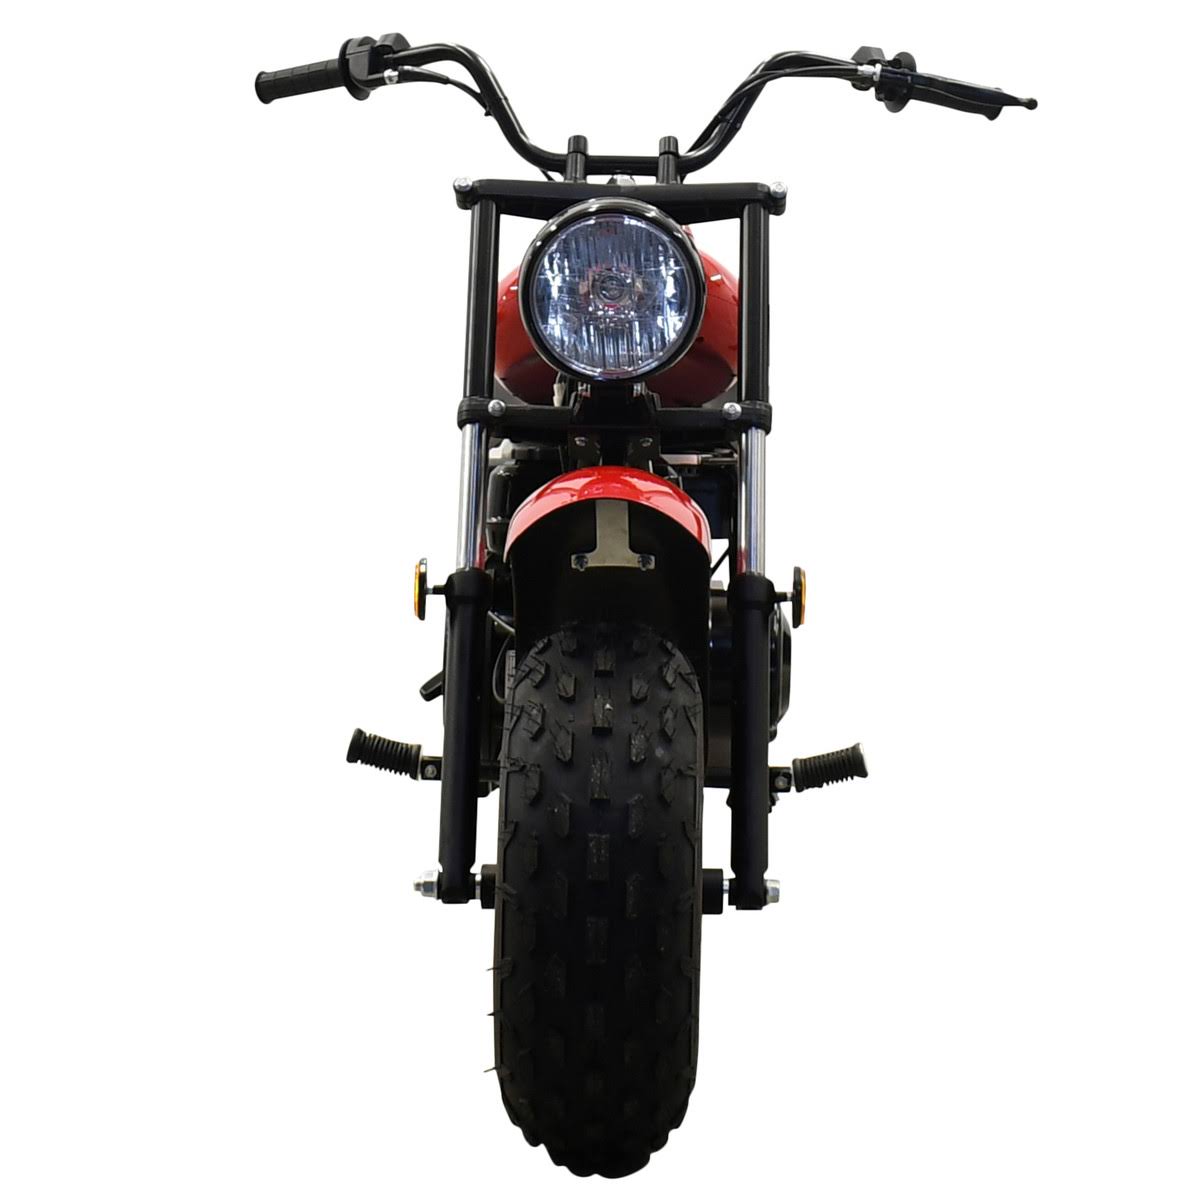 Massimo Mini Bike 200 Motorcycle (Red)